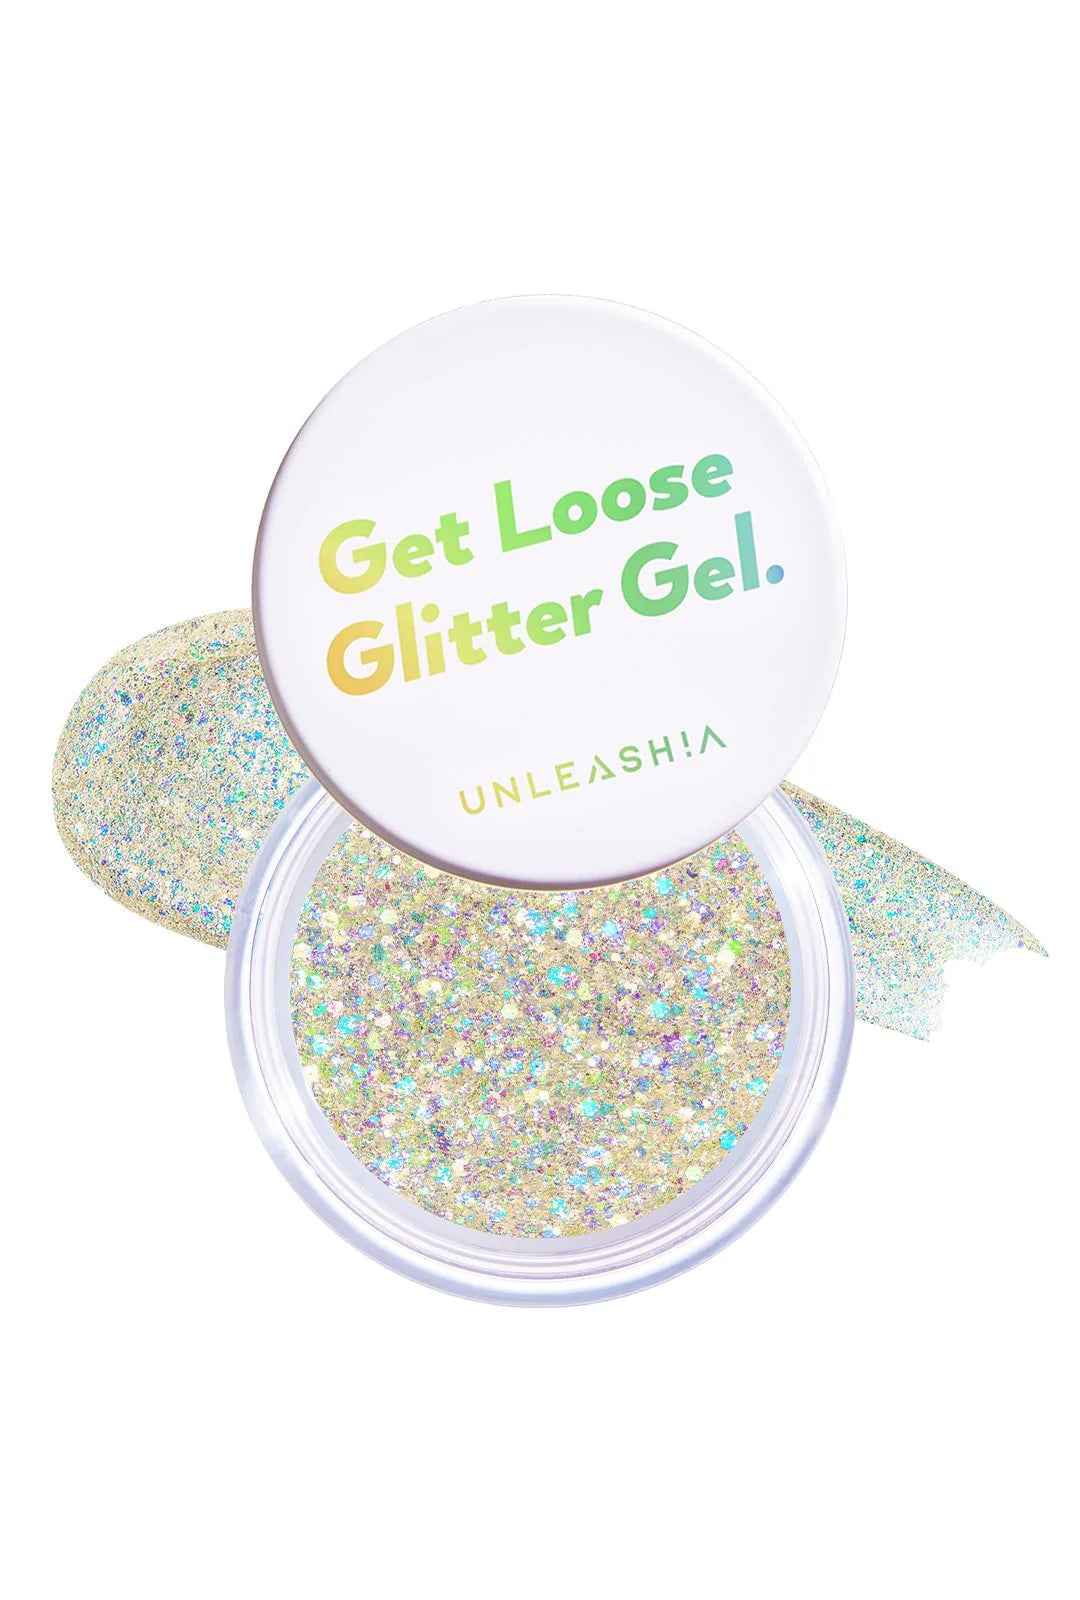 Unleashia, Get Loose Glitter Gel